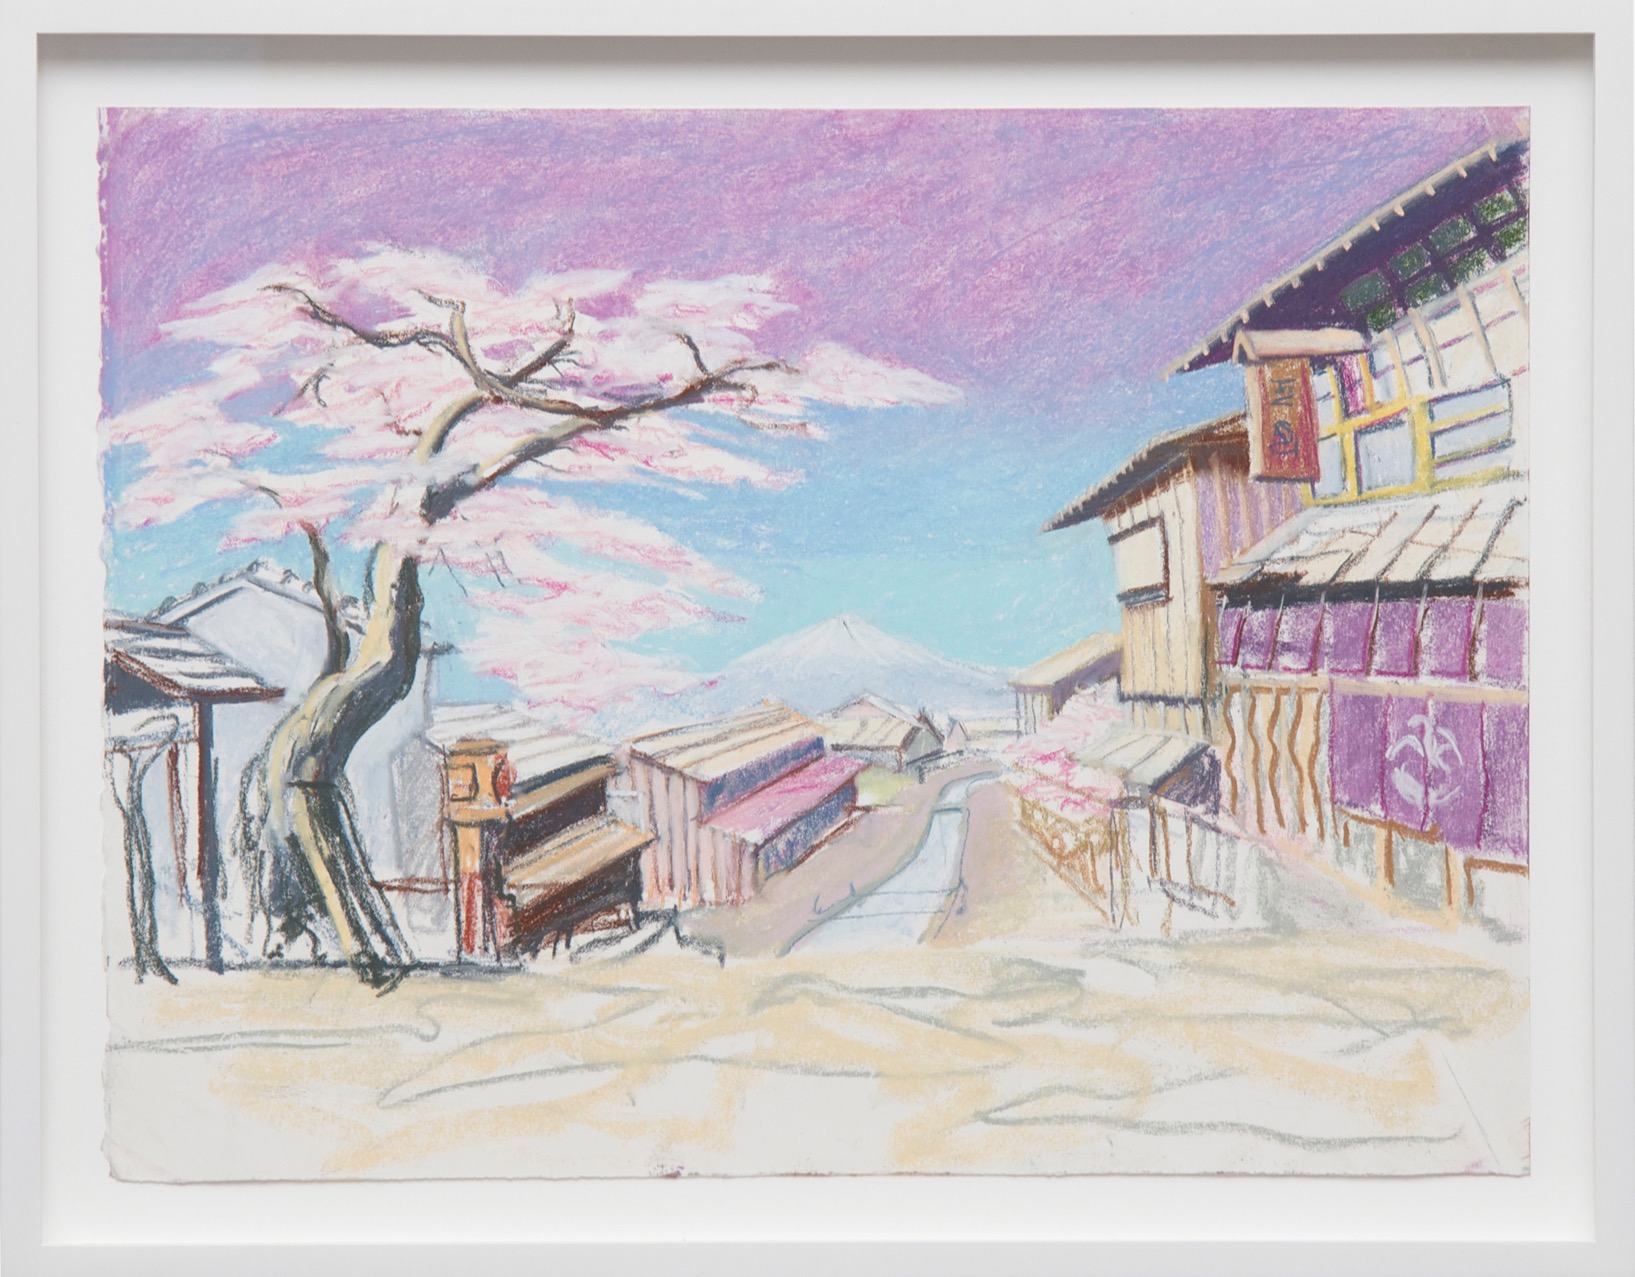 About the Artwork David Blandy, Sakura Village (s F3 Ng Ryu Stage), 2013  by David Blandy